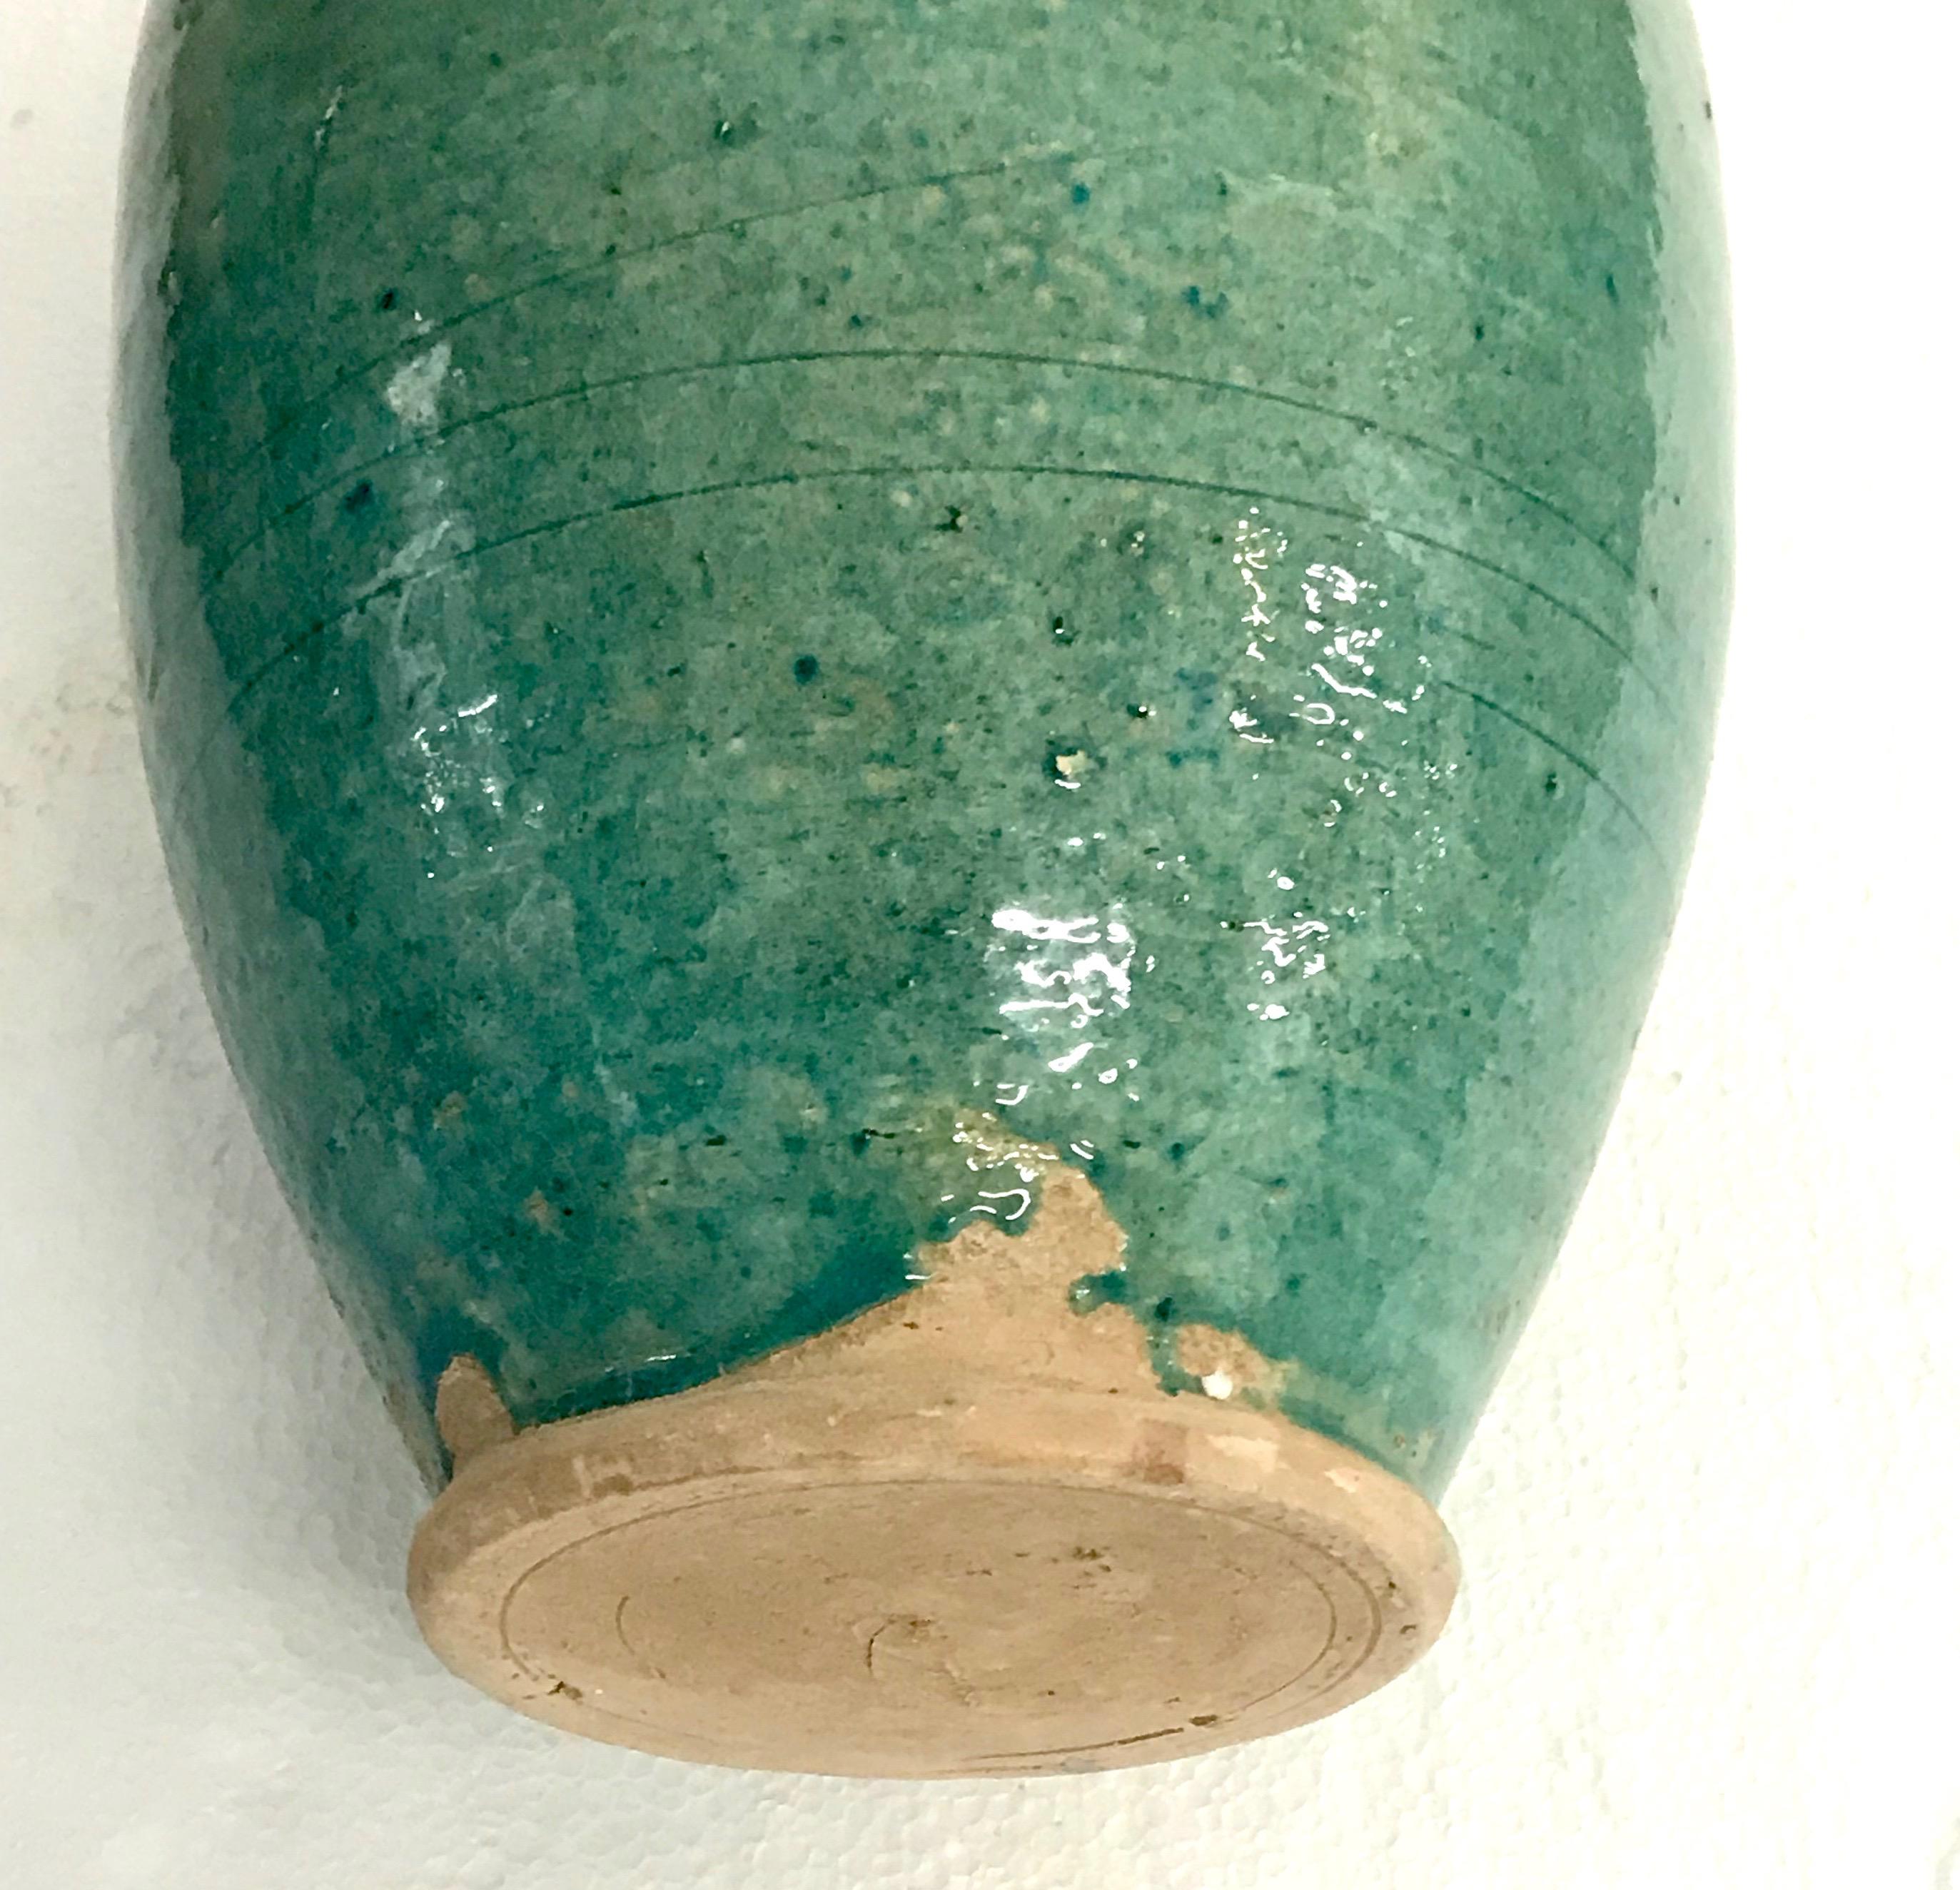 Handmade Rustic Farmhouse Blue-Green Glazed Terracotta Clay Pot Jar with Handles 1